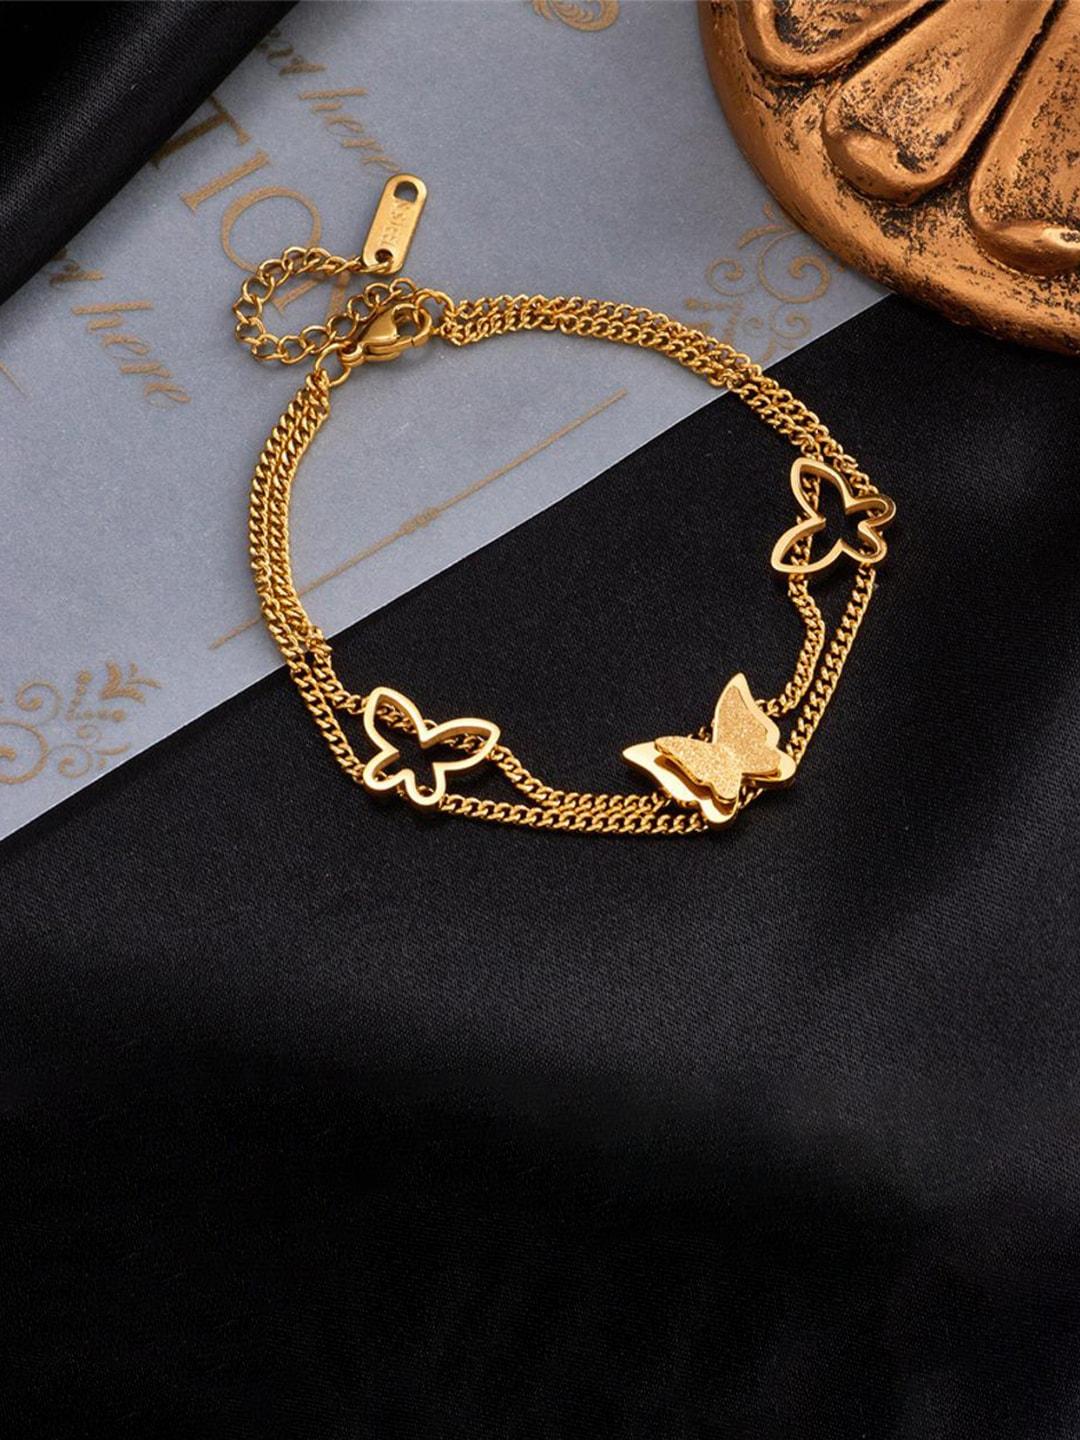 myki gold-plated charm bracelet